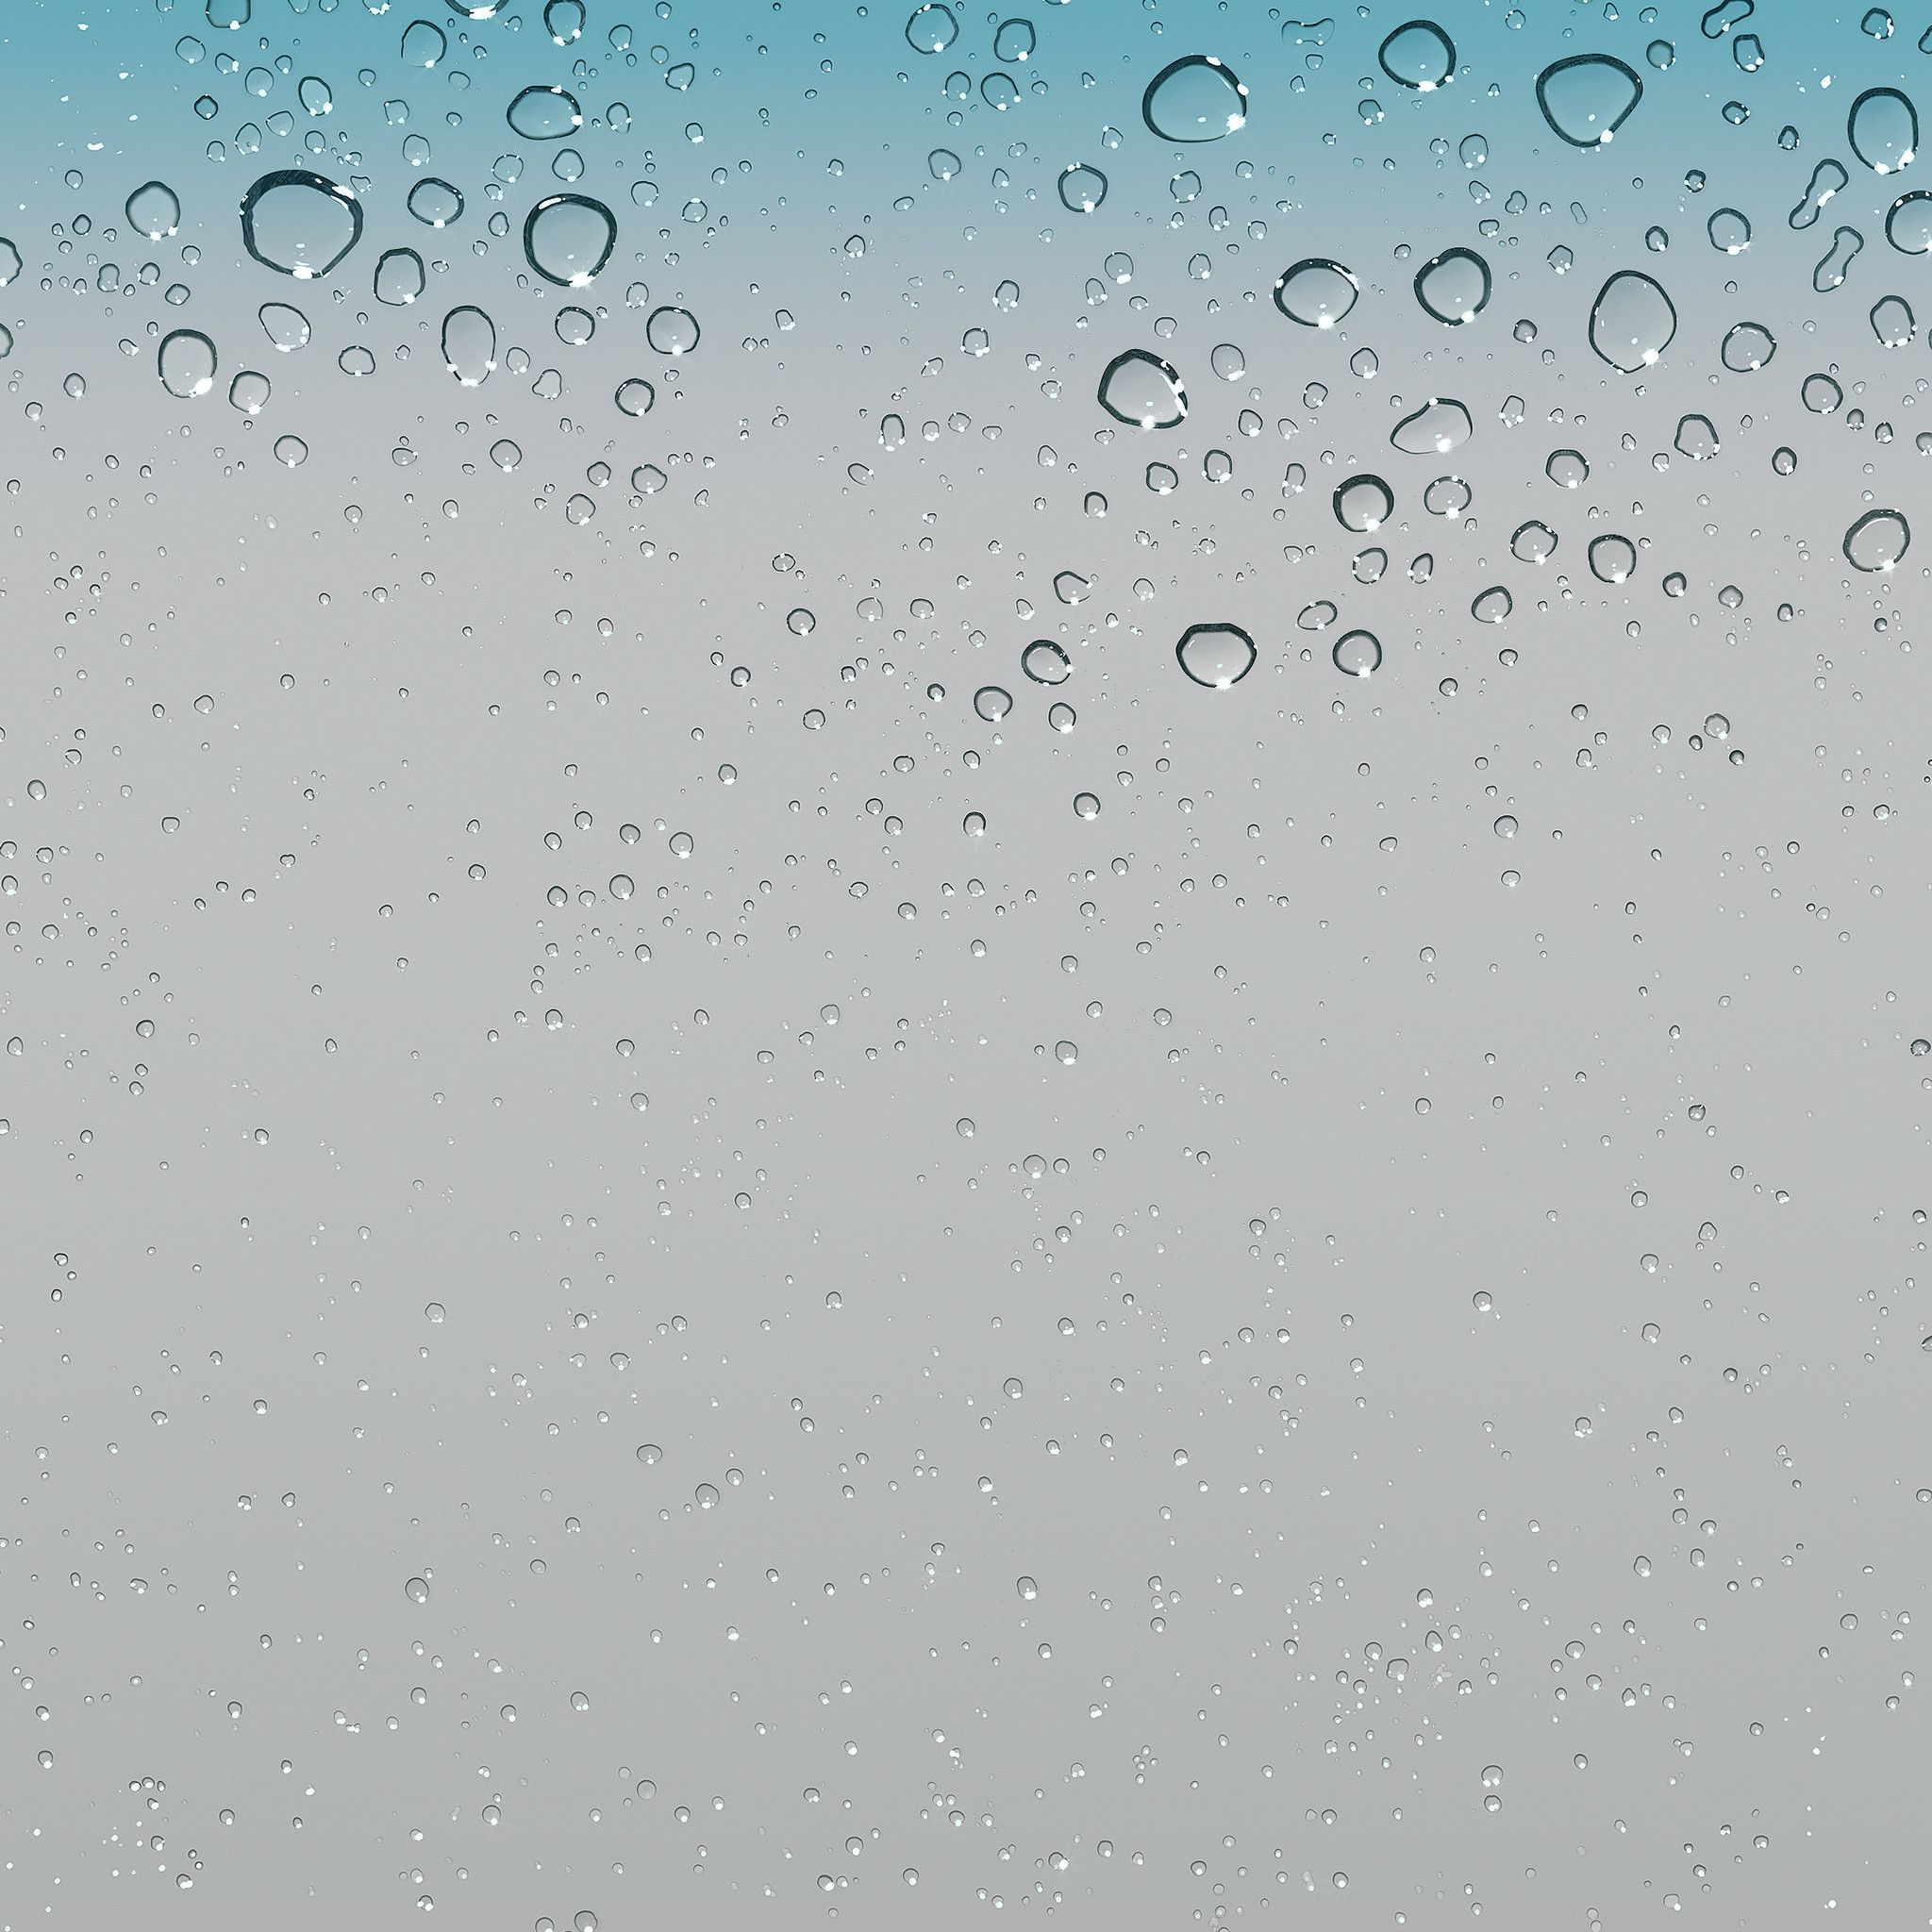 iOS 6 Wallpaper Free iOS 6 Background